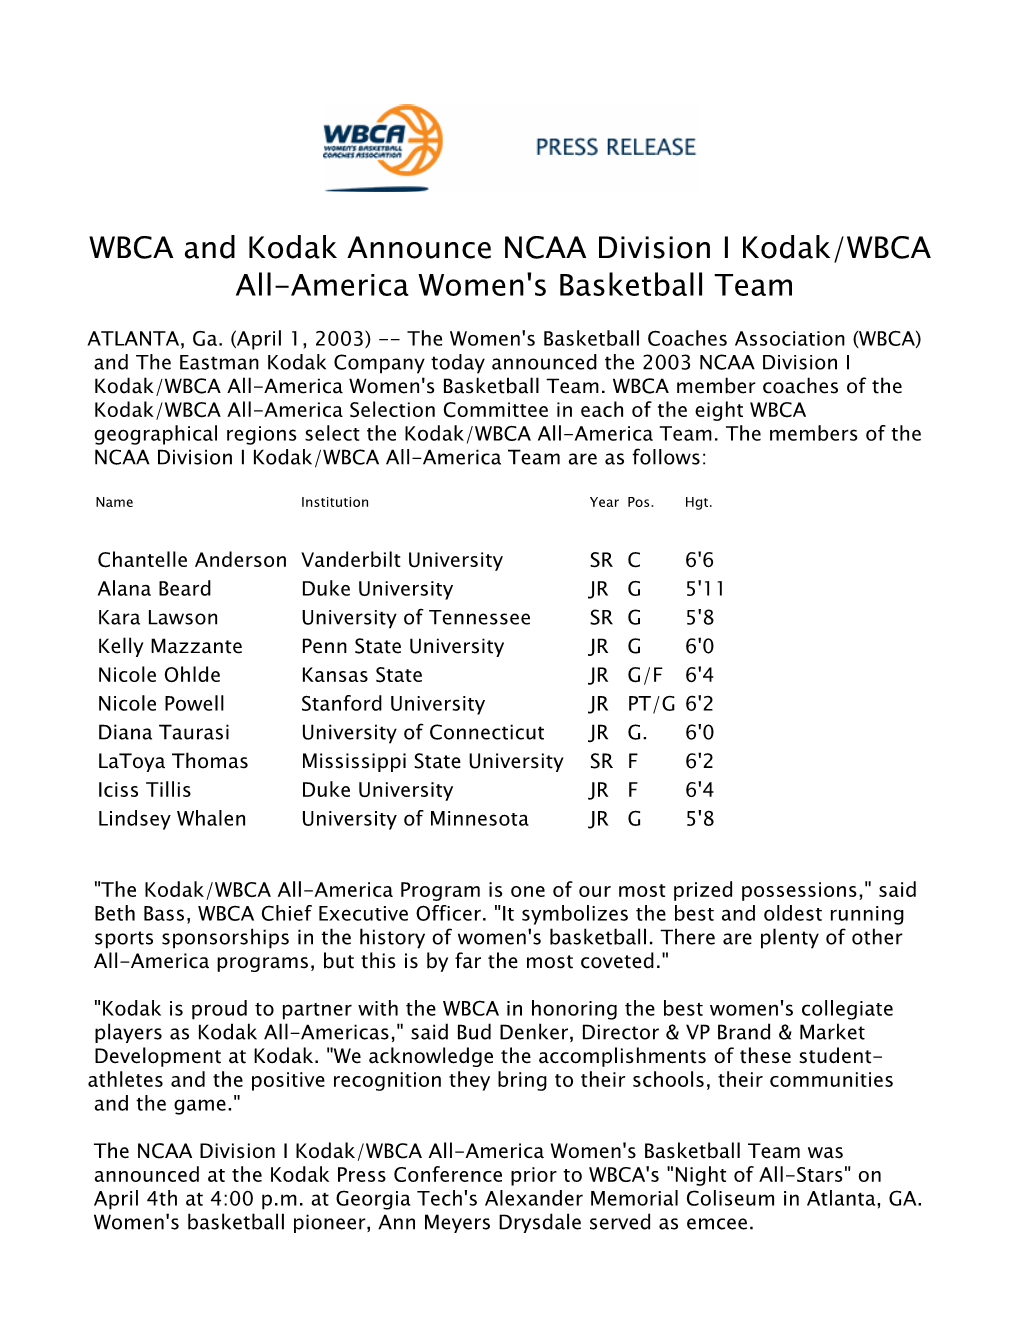 WBCA and Kodak Announce NCAA Division I Kodak/WBCA All-America Women's Basketball Team